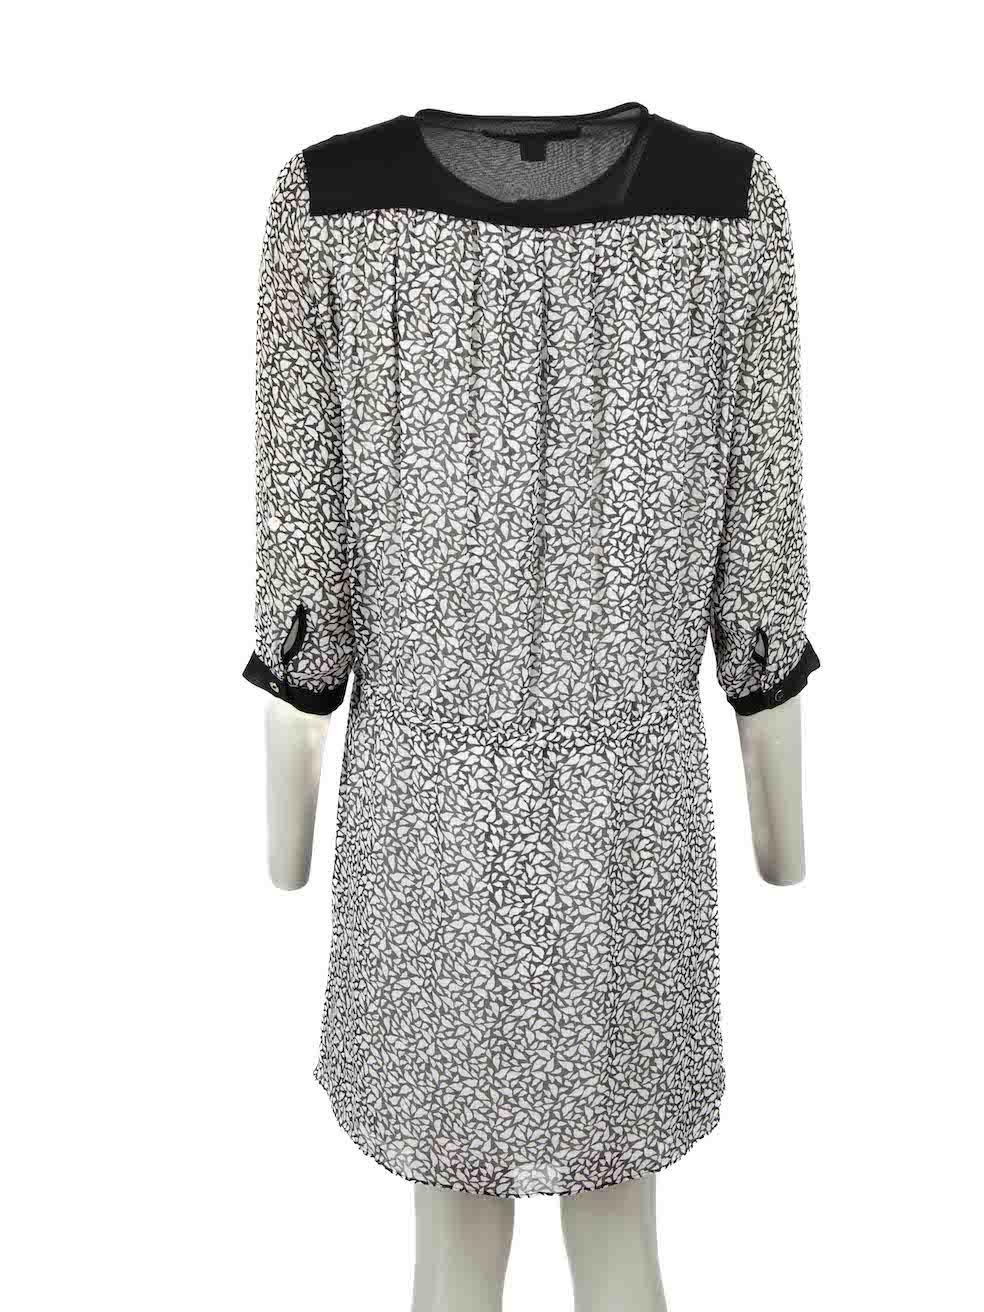 Diane Von Furstenberg Abstract Silk Button Mini Dress Size M In Good Condition For Sale In London, GB